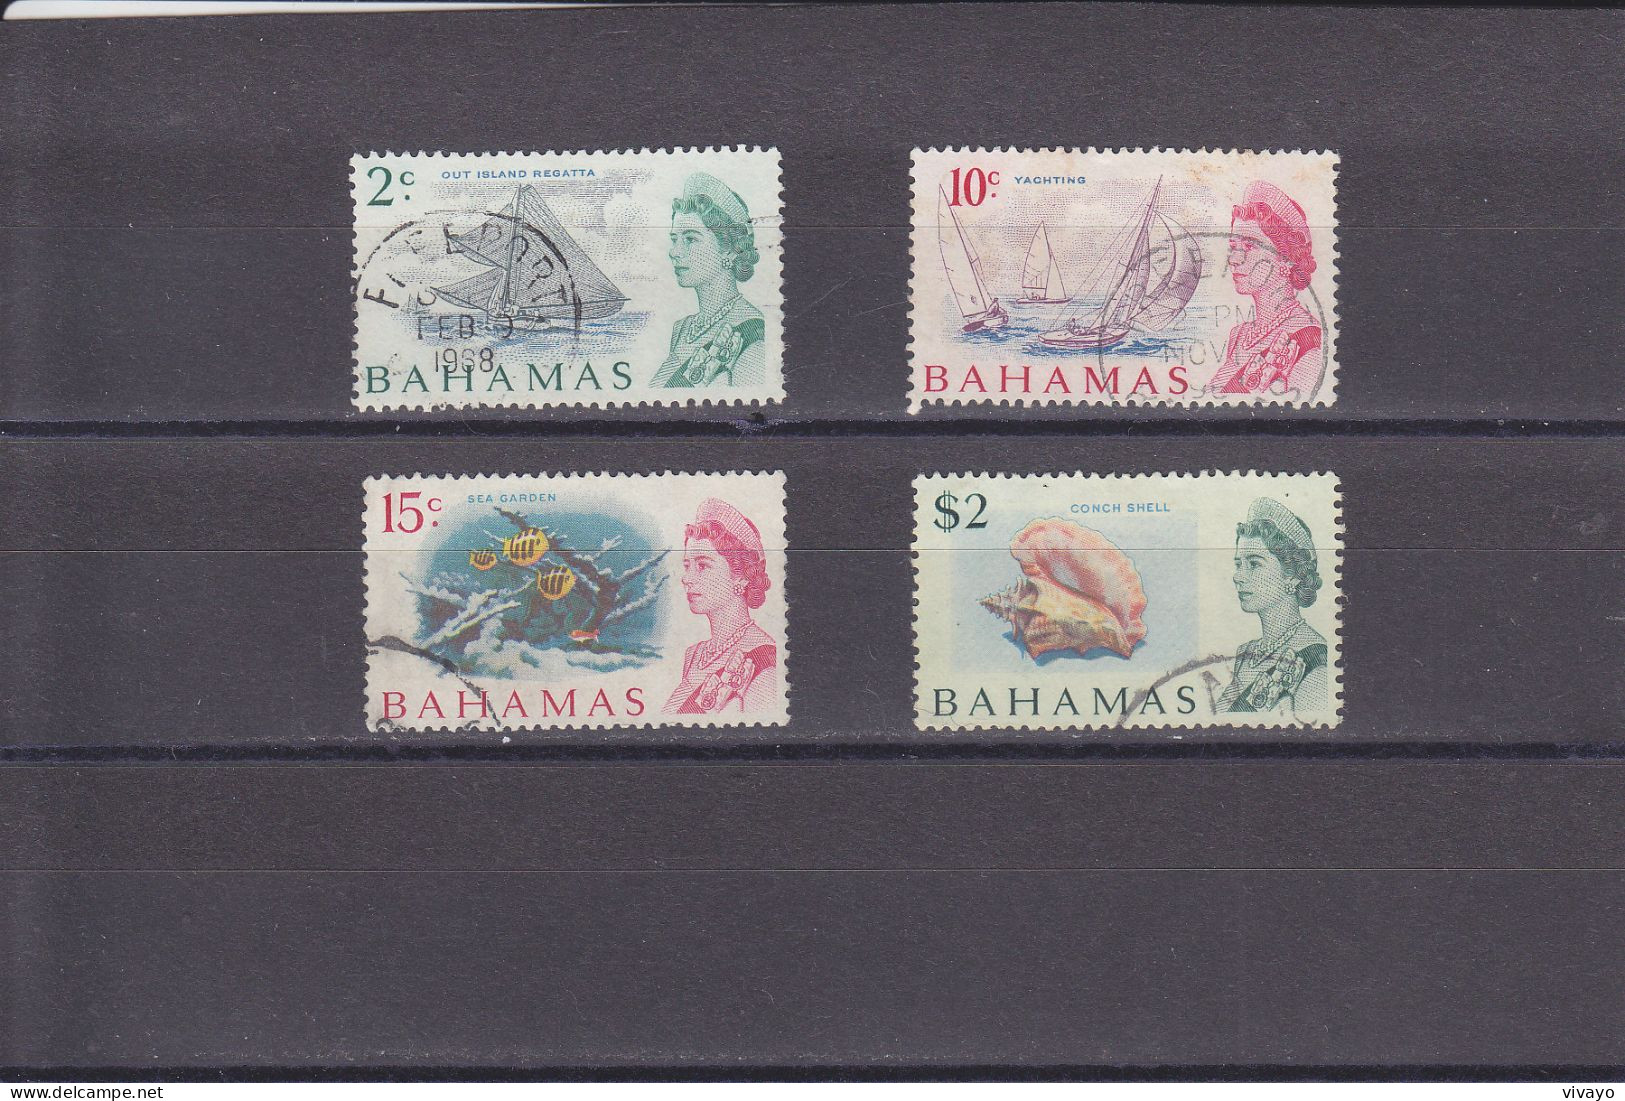 BAHAMAS - 1967 - O/FINE CANCELLED -  QEII & REGATTA, YACHTING, SEA GARDEN, SHELL  Yv. 242, 247, 250, 254 - 1963-1973 Interne Autonomie